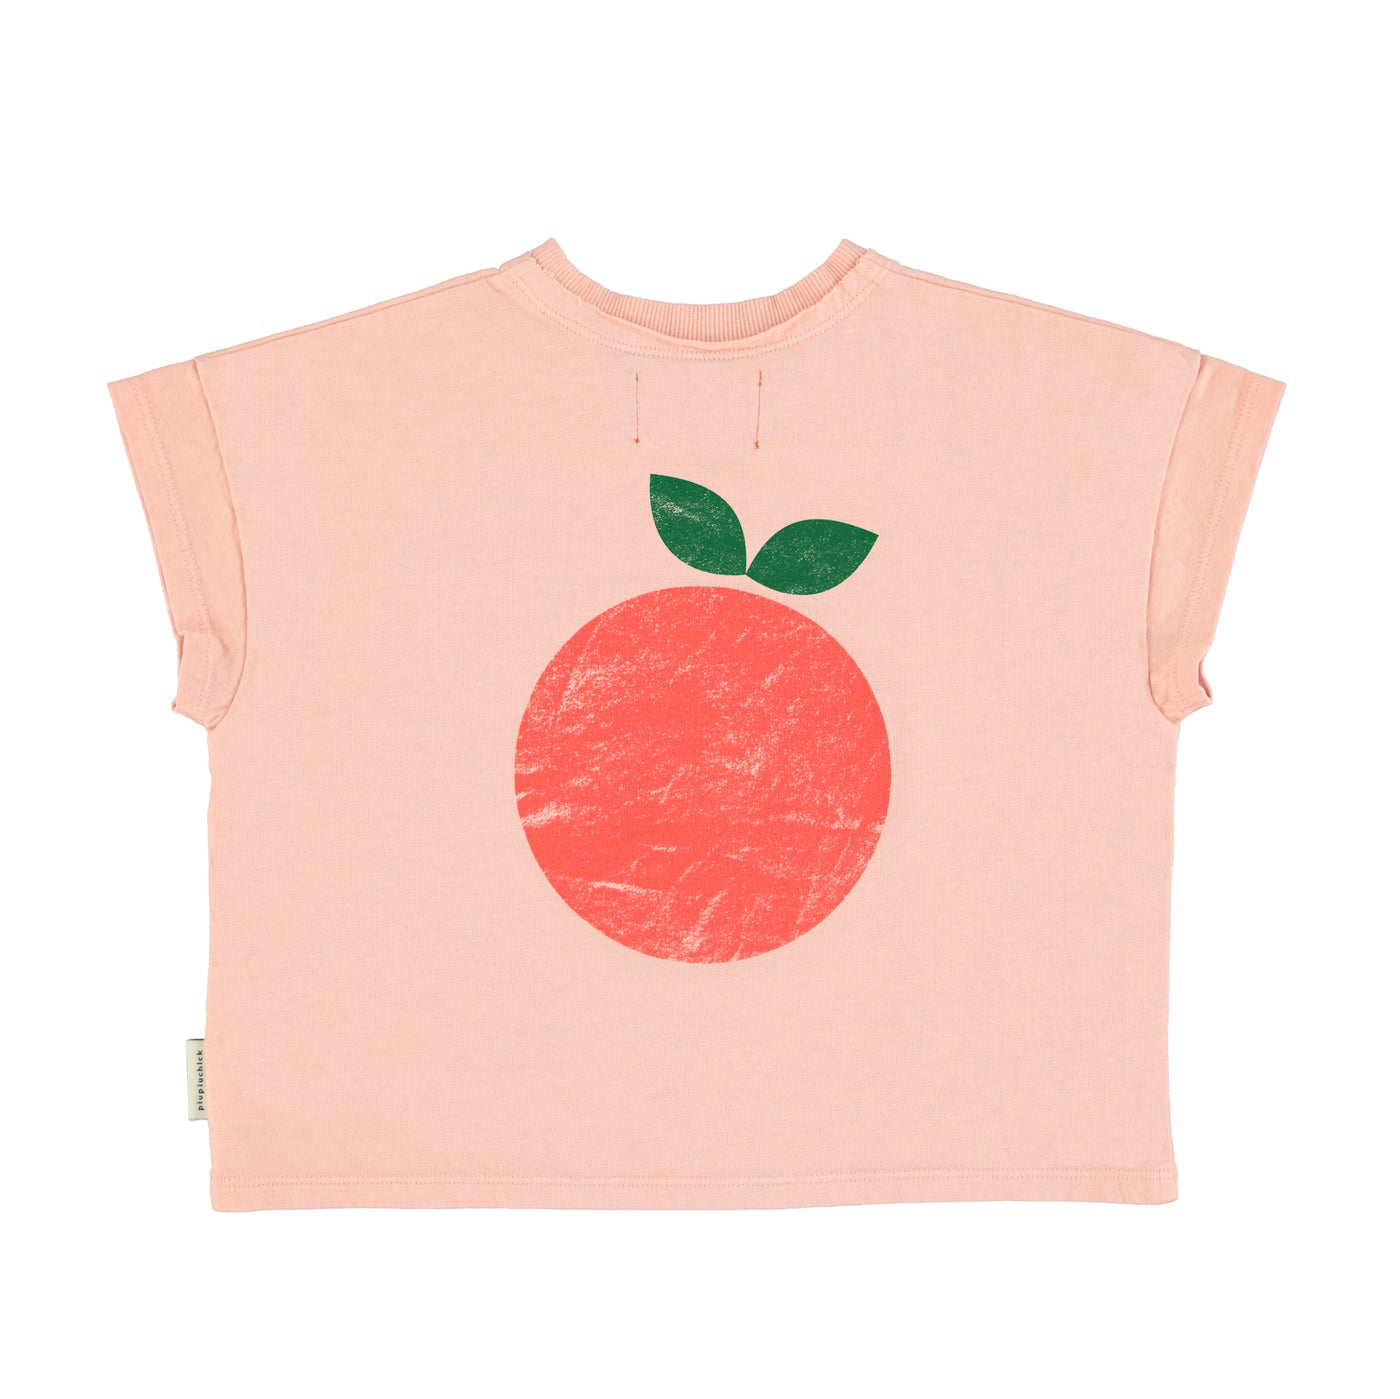 PIUPIUCHICK - T-Shirt Light Pink "Stay Fresh" - Le CirQue Kidsconceptstore 